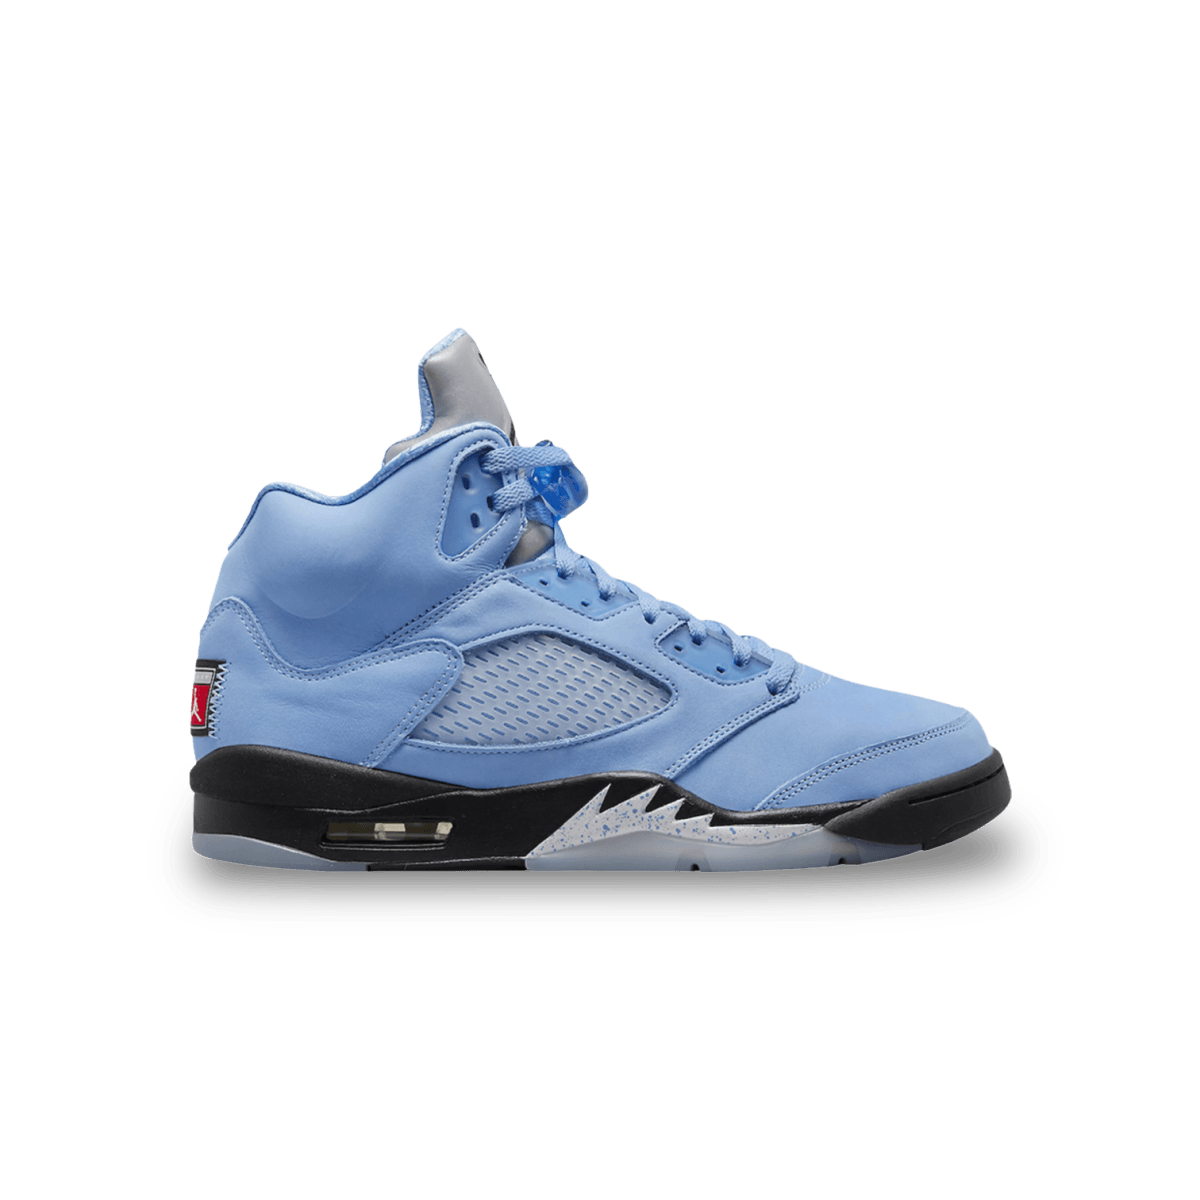 Air Jordan 5 Retro 'UNC' Blue - Mid Sneaker - Jordan - Jawns on Fire - sneakers